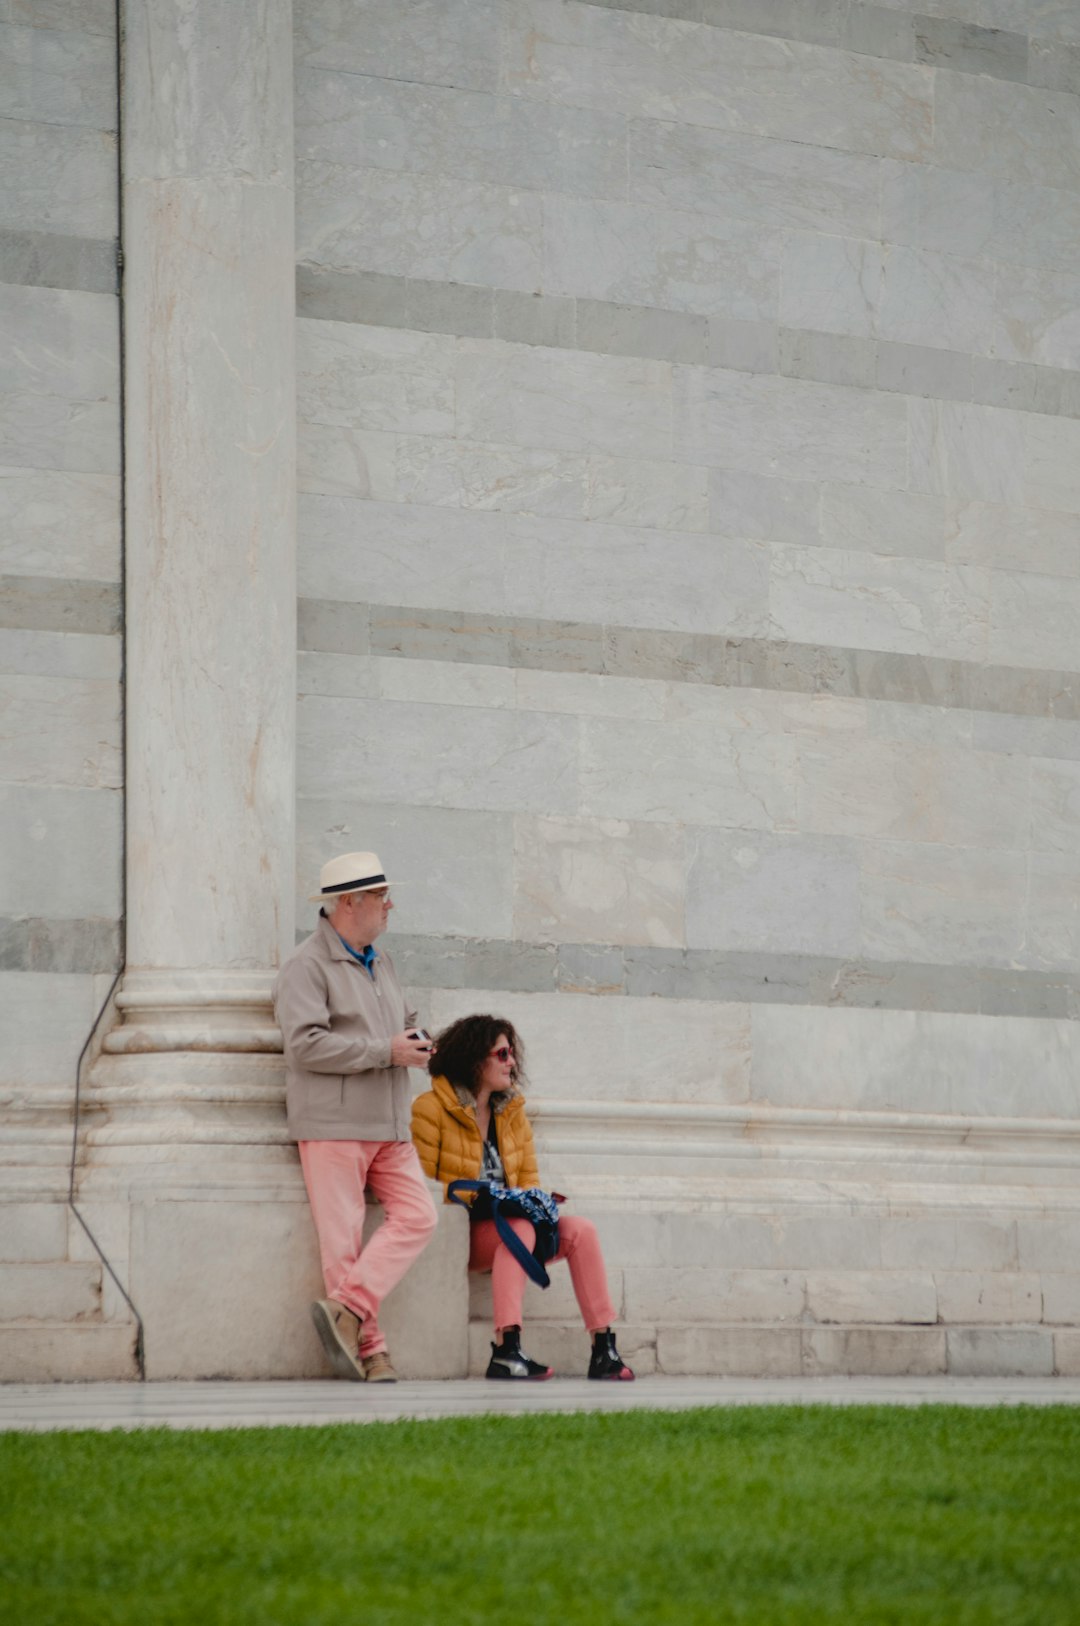 woman sitting on concrete pavement near man standing